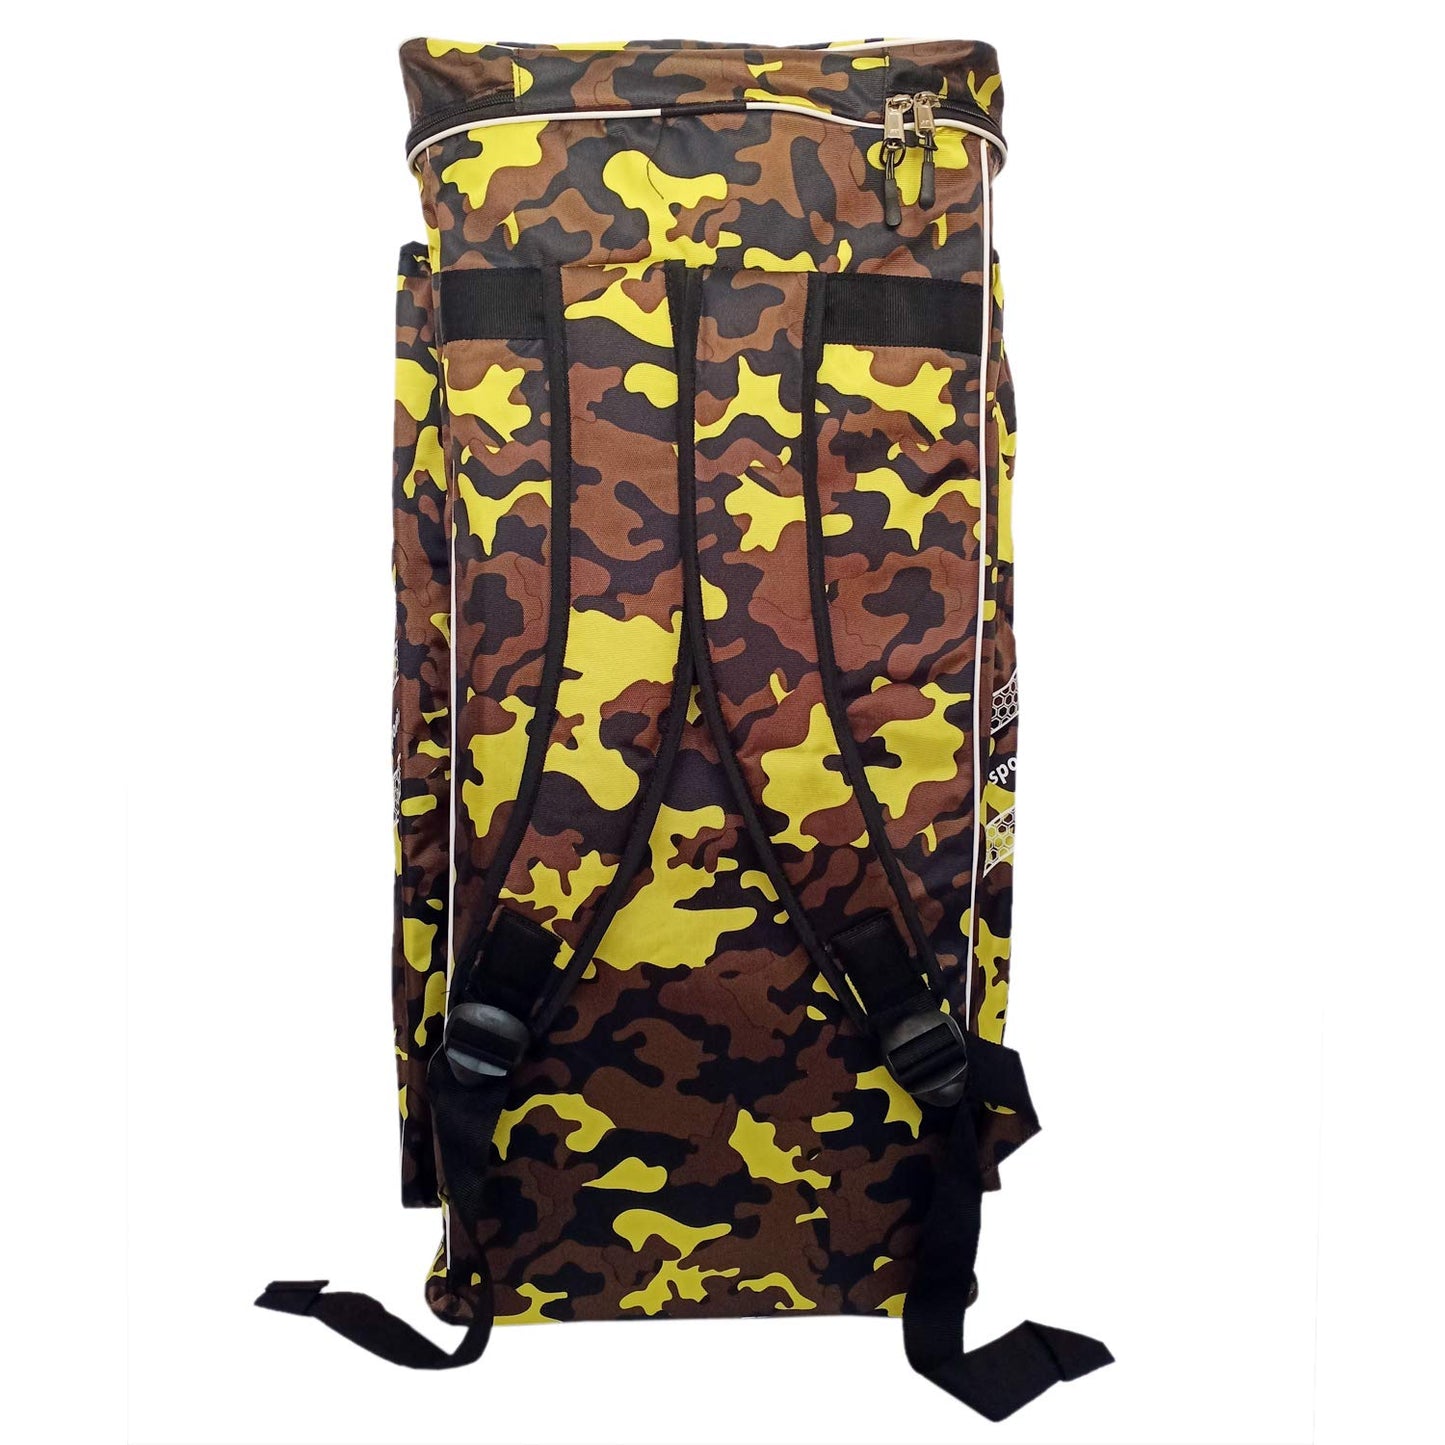 HRS Players Duffle Cricket Kit Bag - Camo/Yellow - Best Price online Prokicksports.com